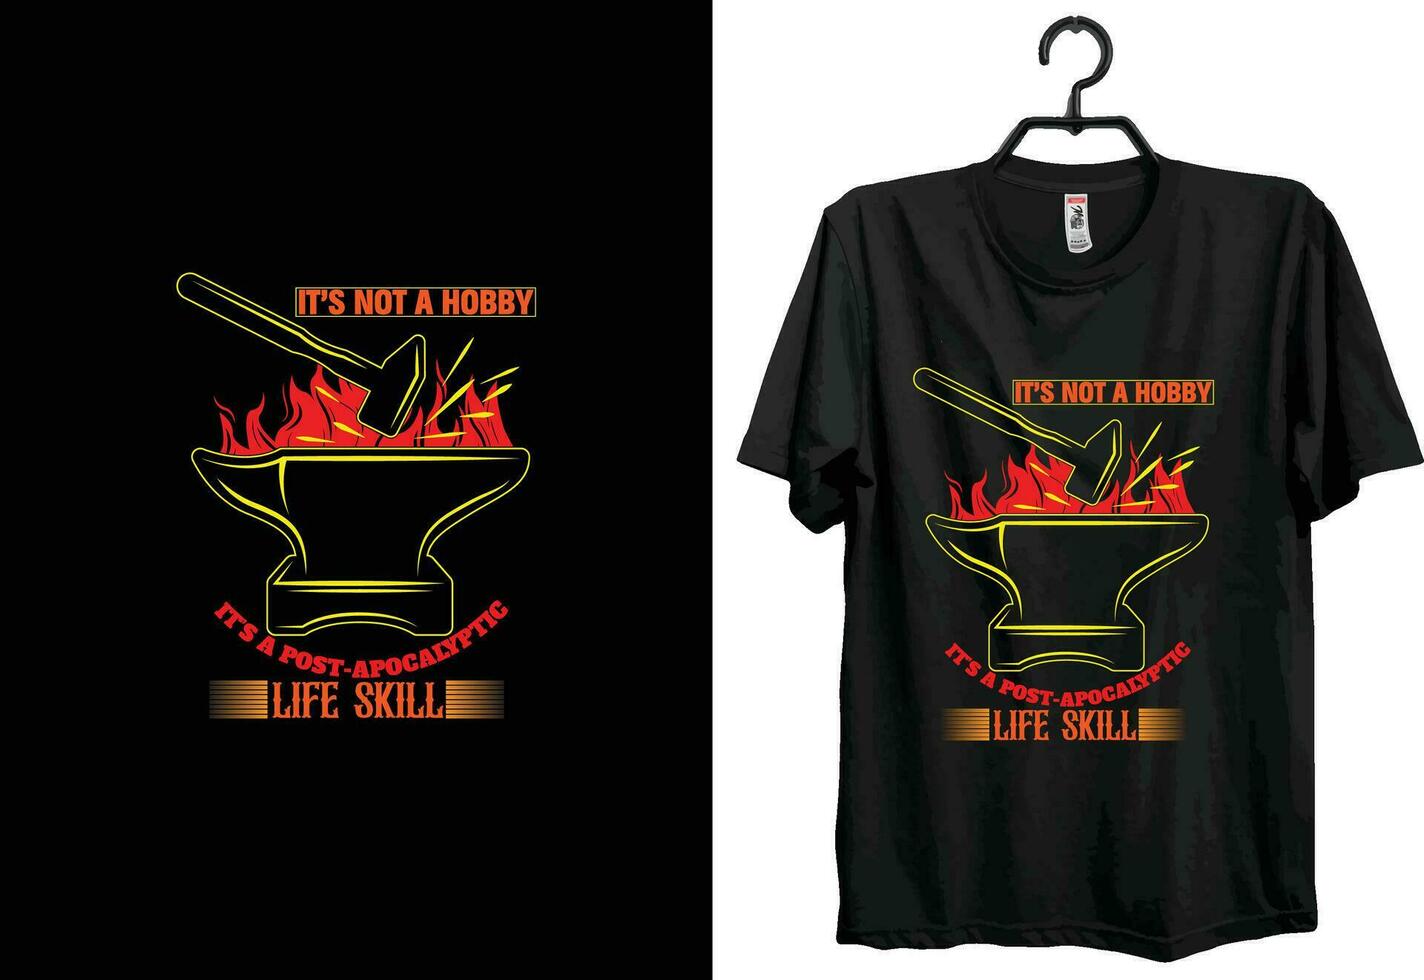 Blacksmith t-shirt design. Typography, Custom, Vector t-shirt design. Funny blacksmith t-shirt design